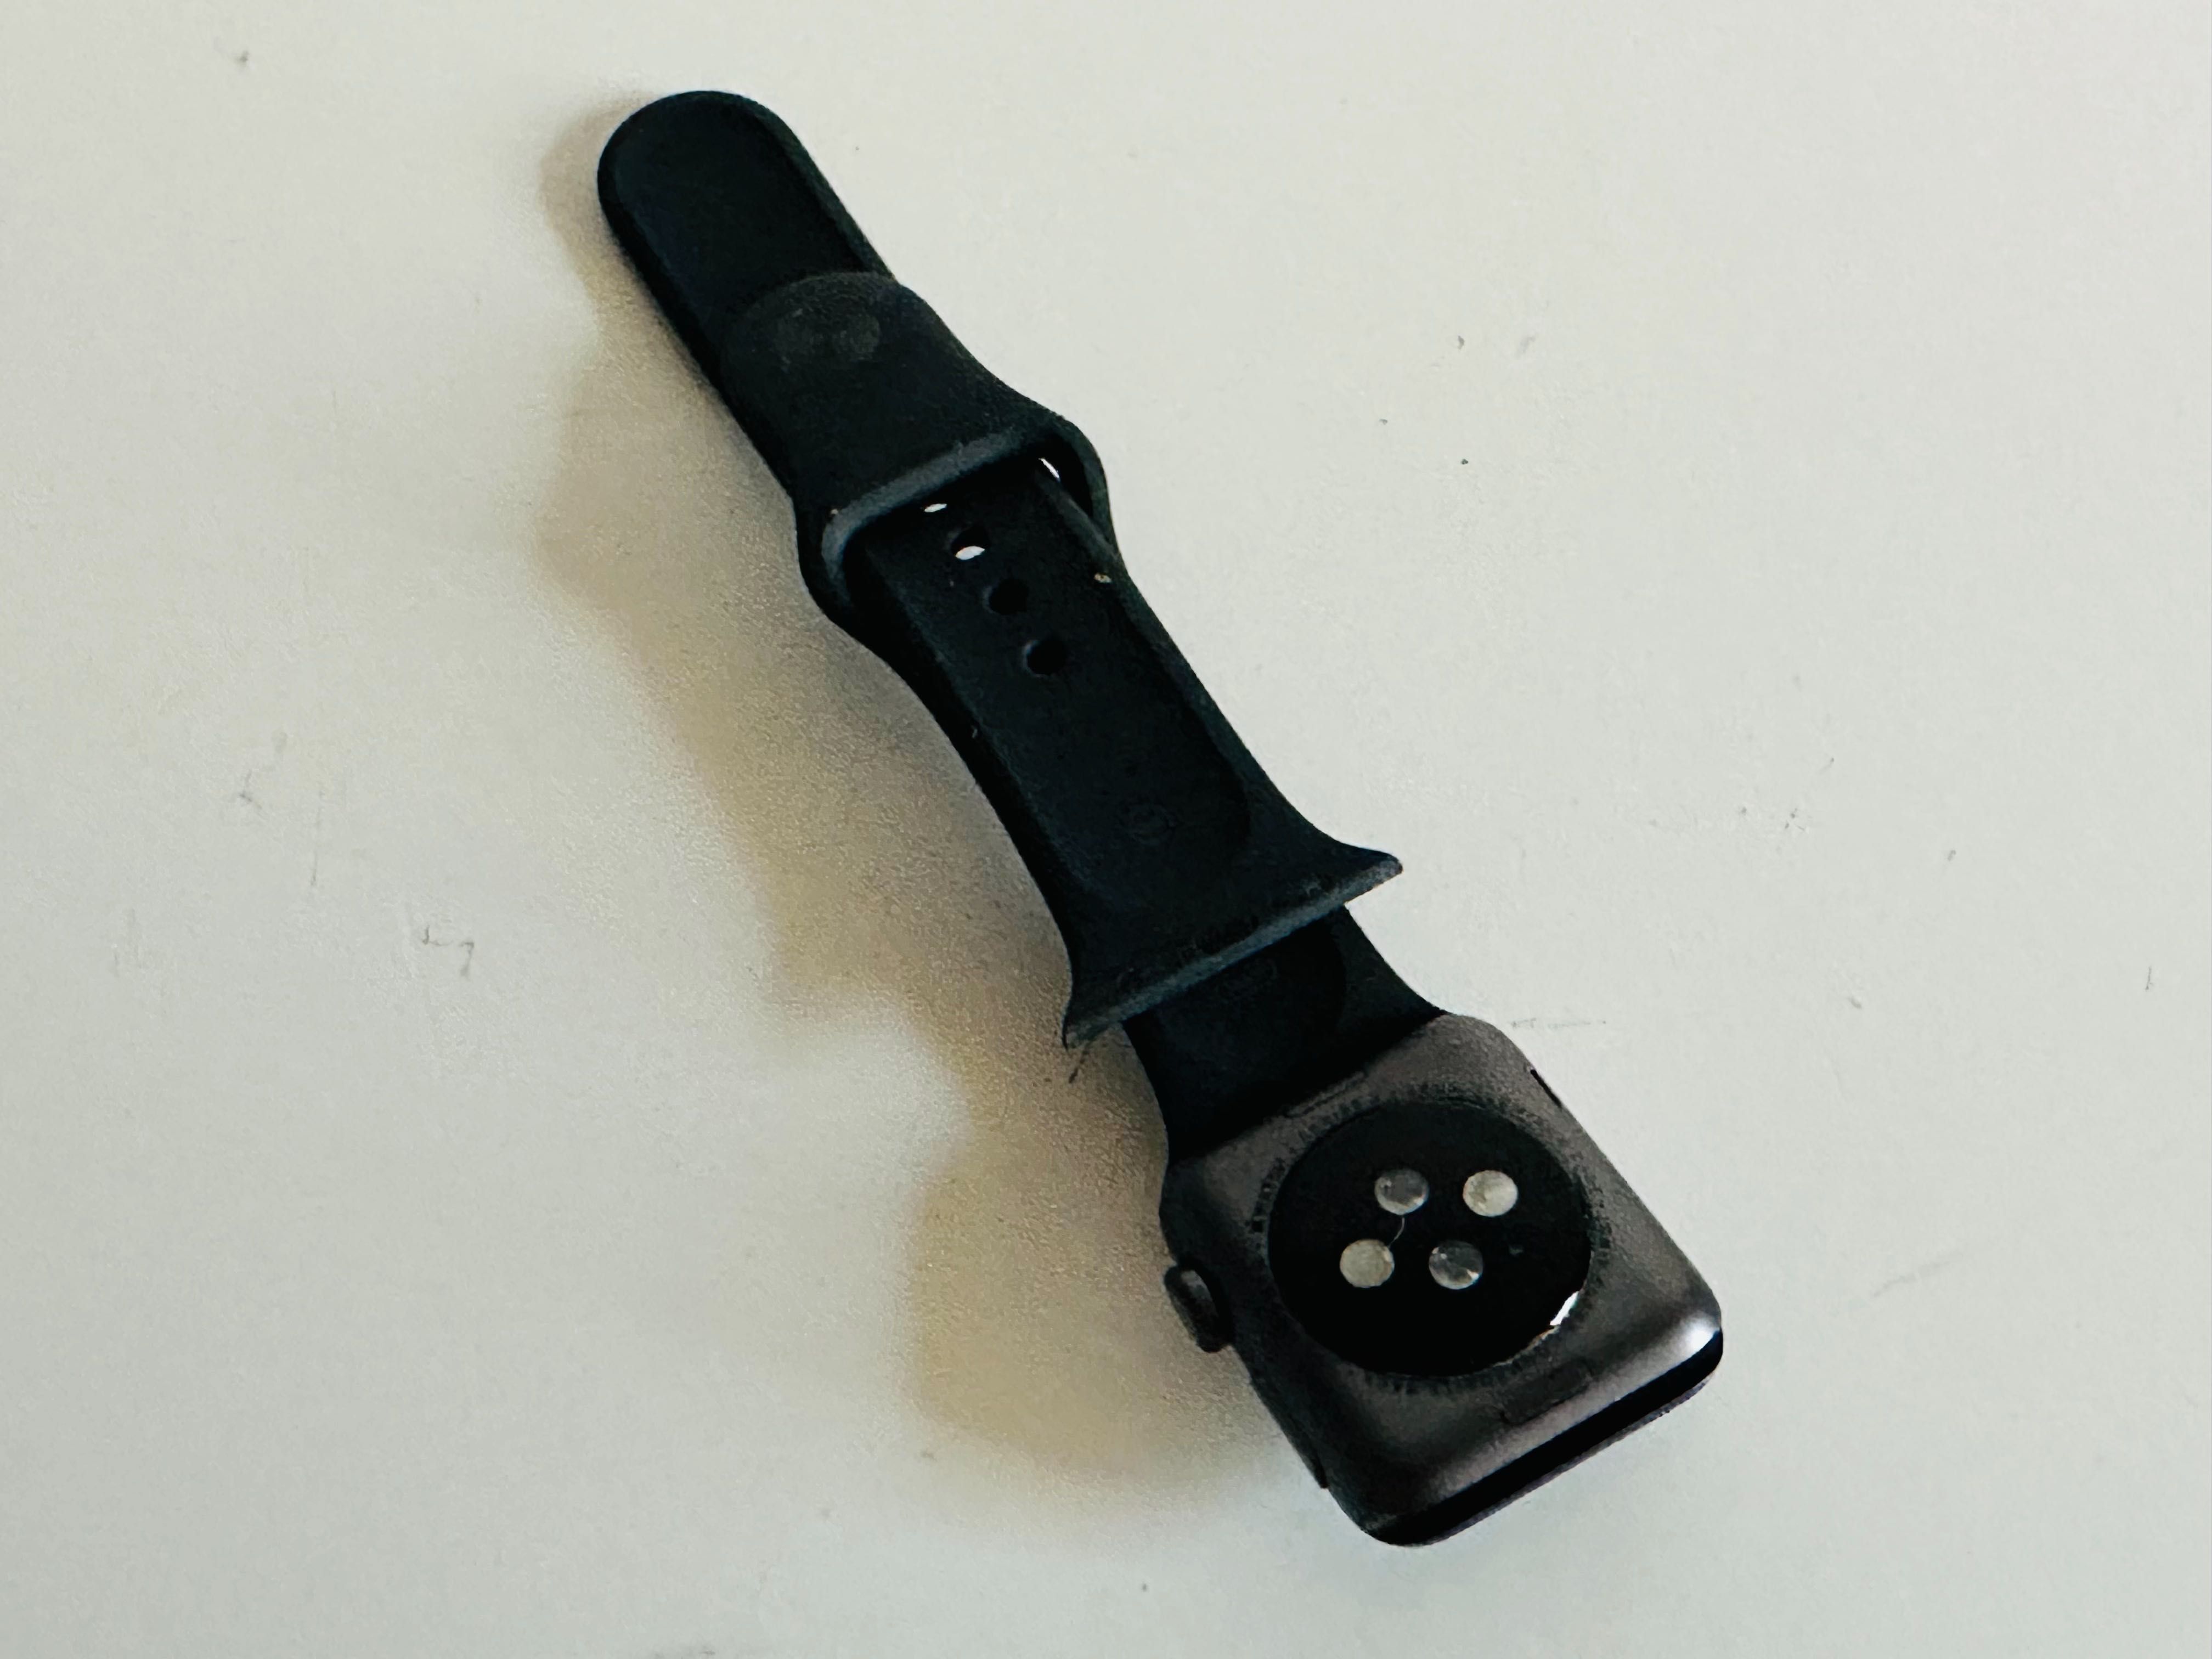 Apple Watch Series 3 38mm GPS Grey Szary Bez Blokad Super Stan